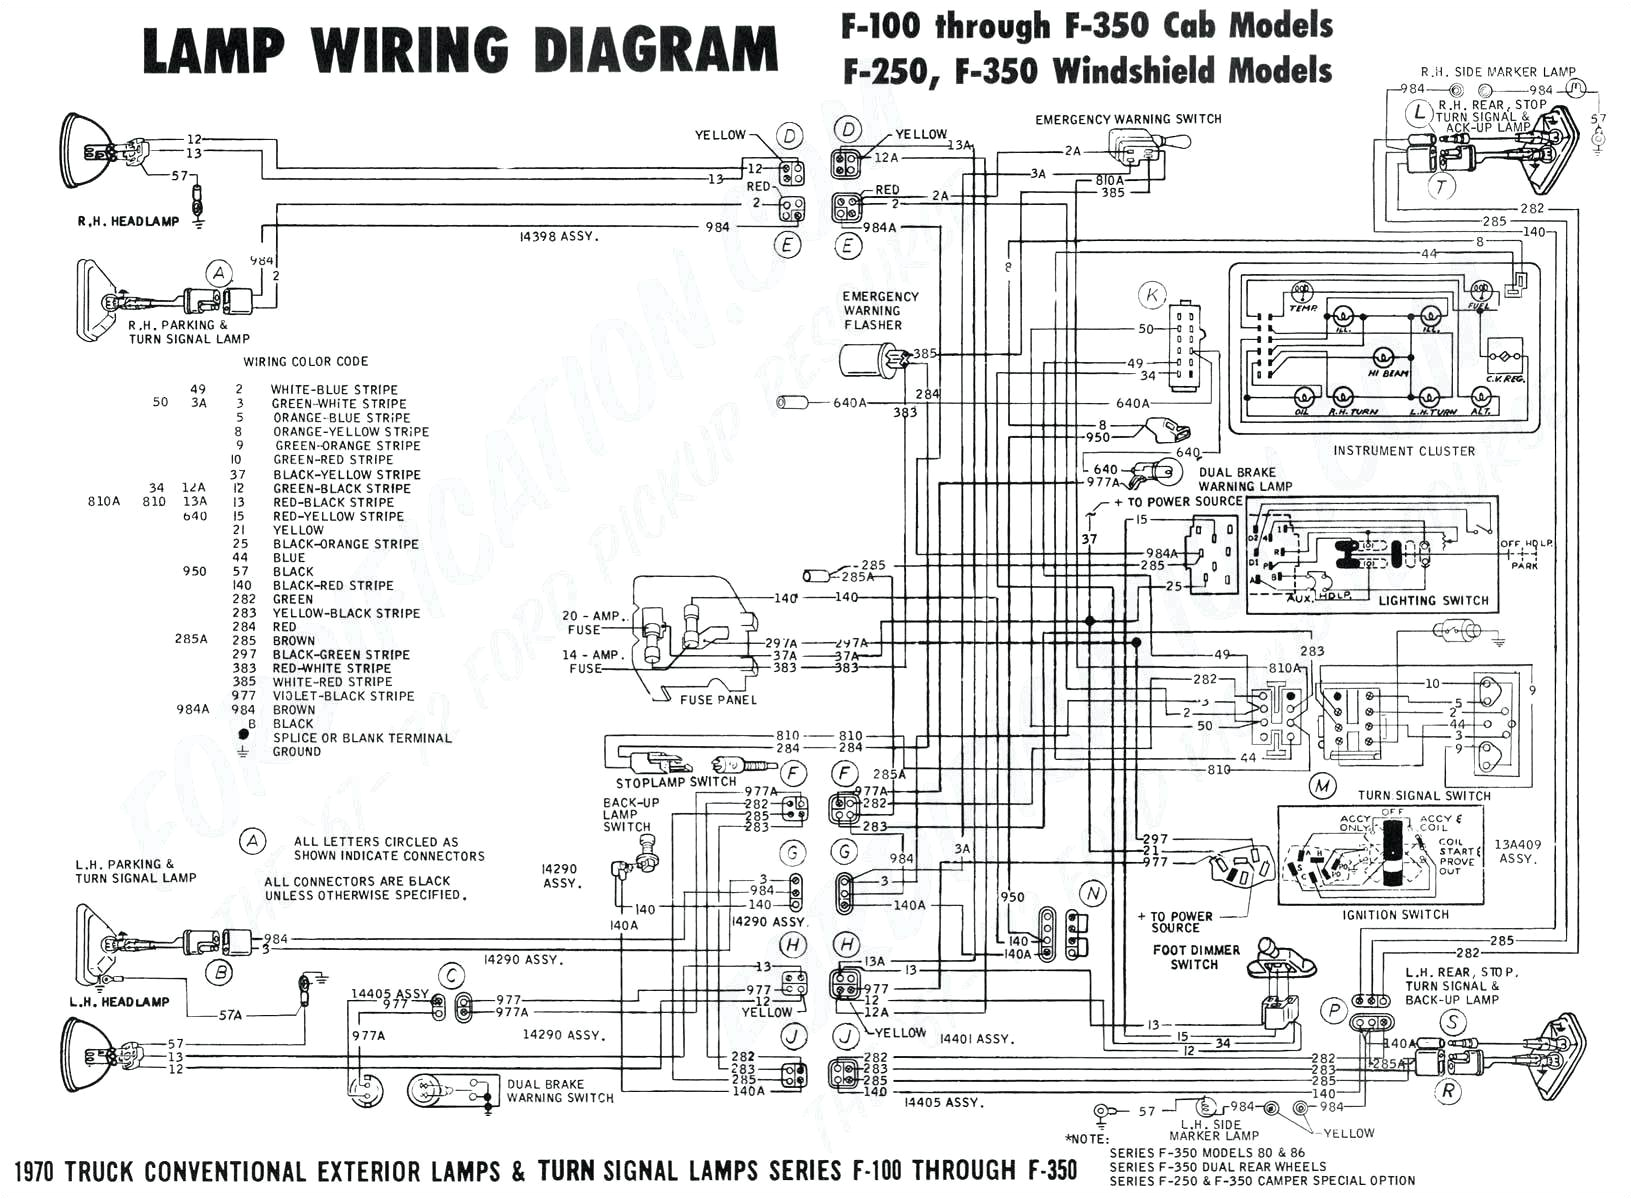 2003 chevy suburban wiring diagram 2003 chevy suburban radio wiring diagram autos post wire center u2022 rh ingredican co chevrolet suburban wiring diagram diagram chevrolet suburban wiring jpg